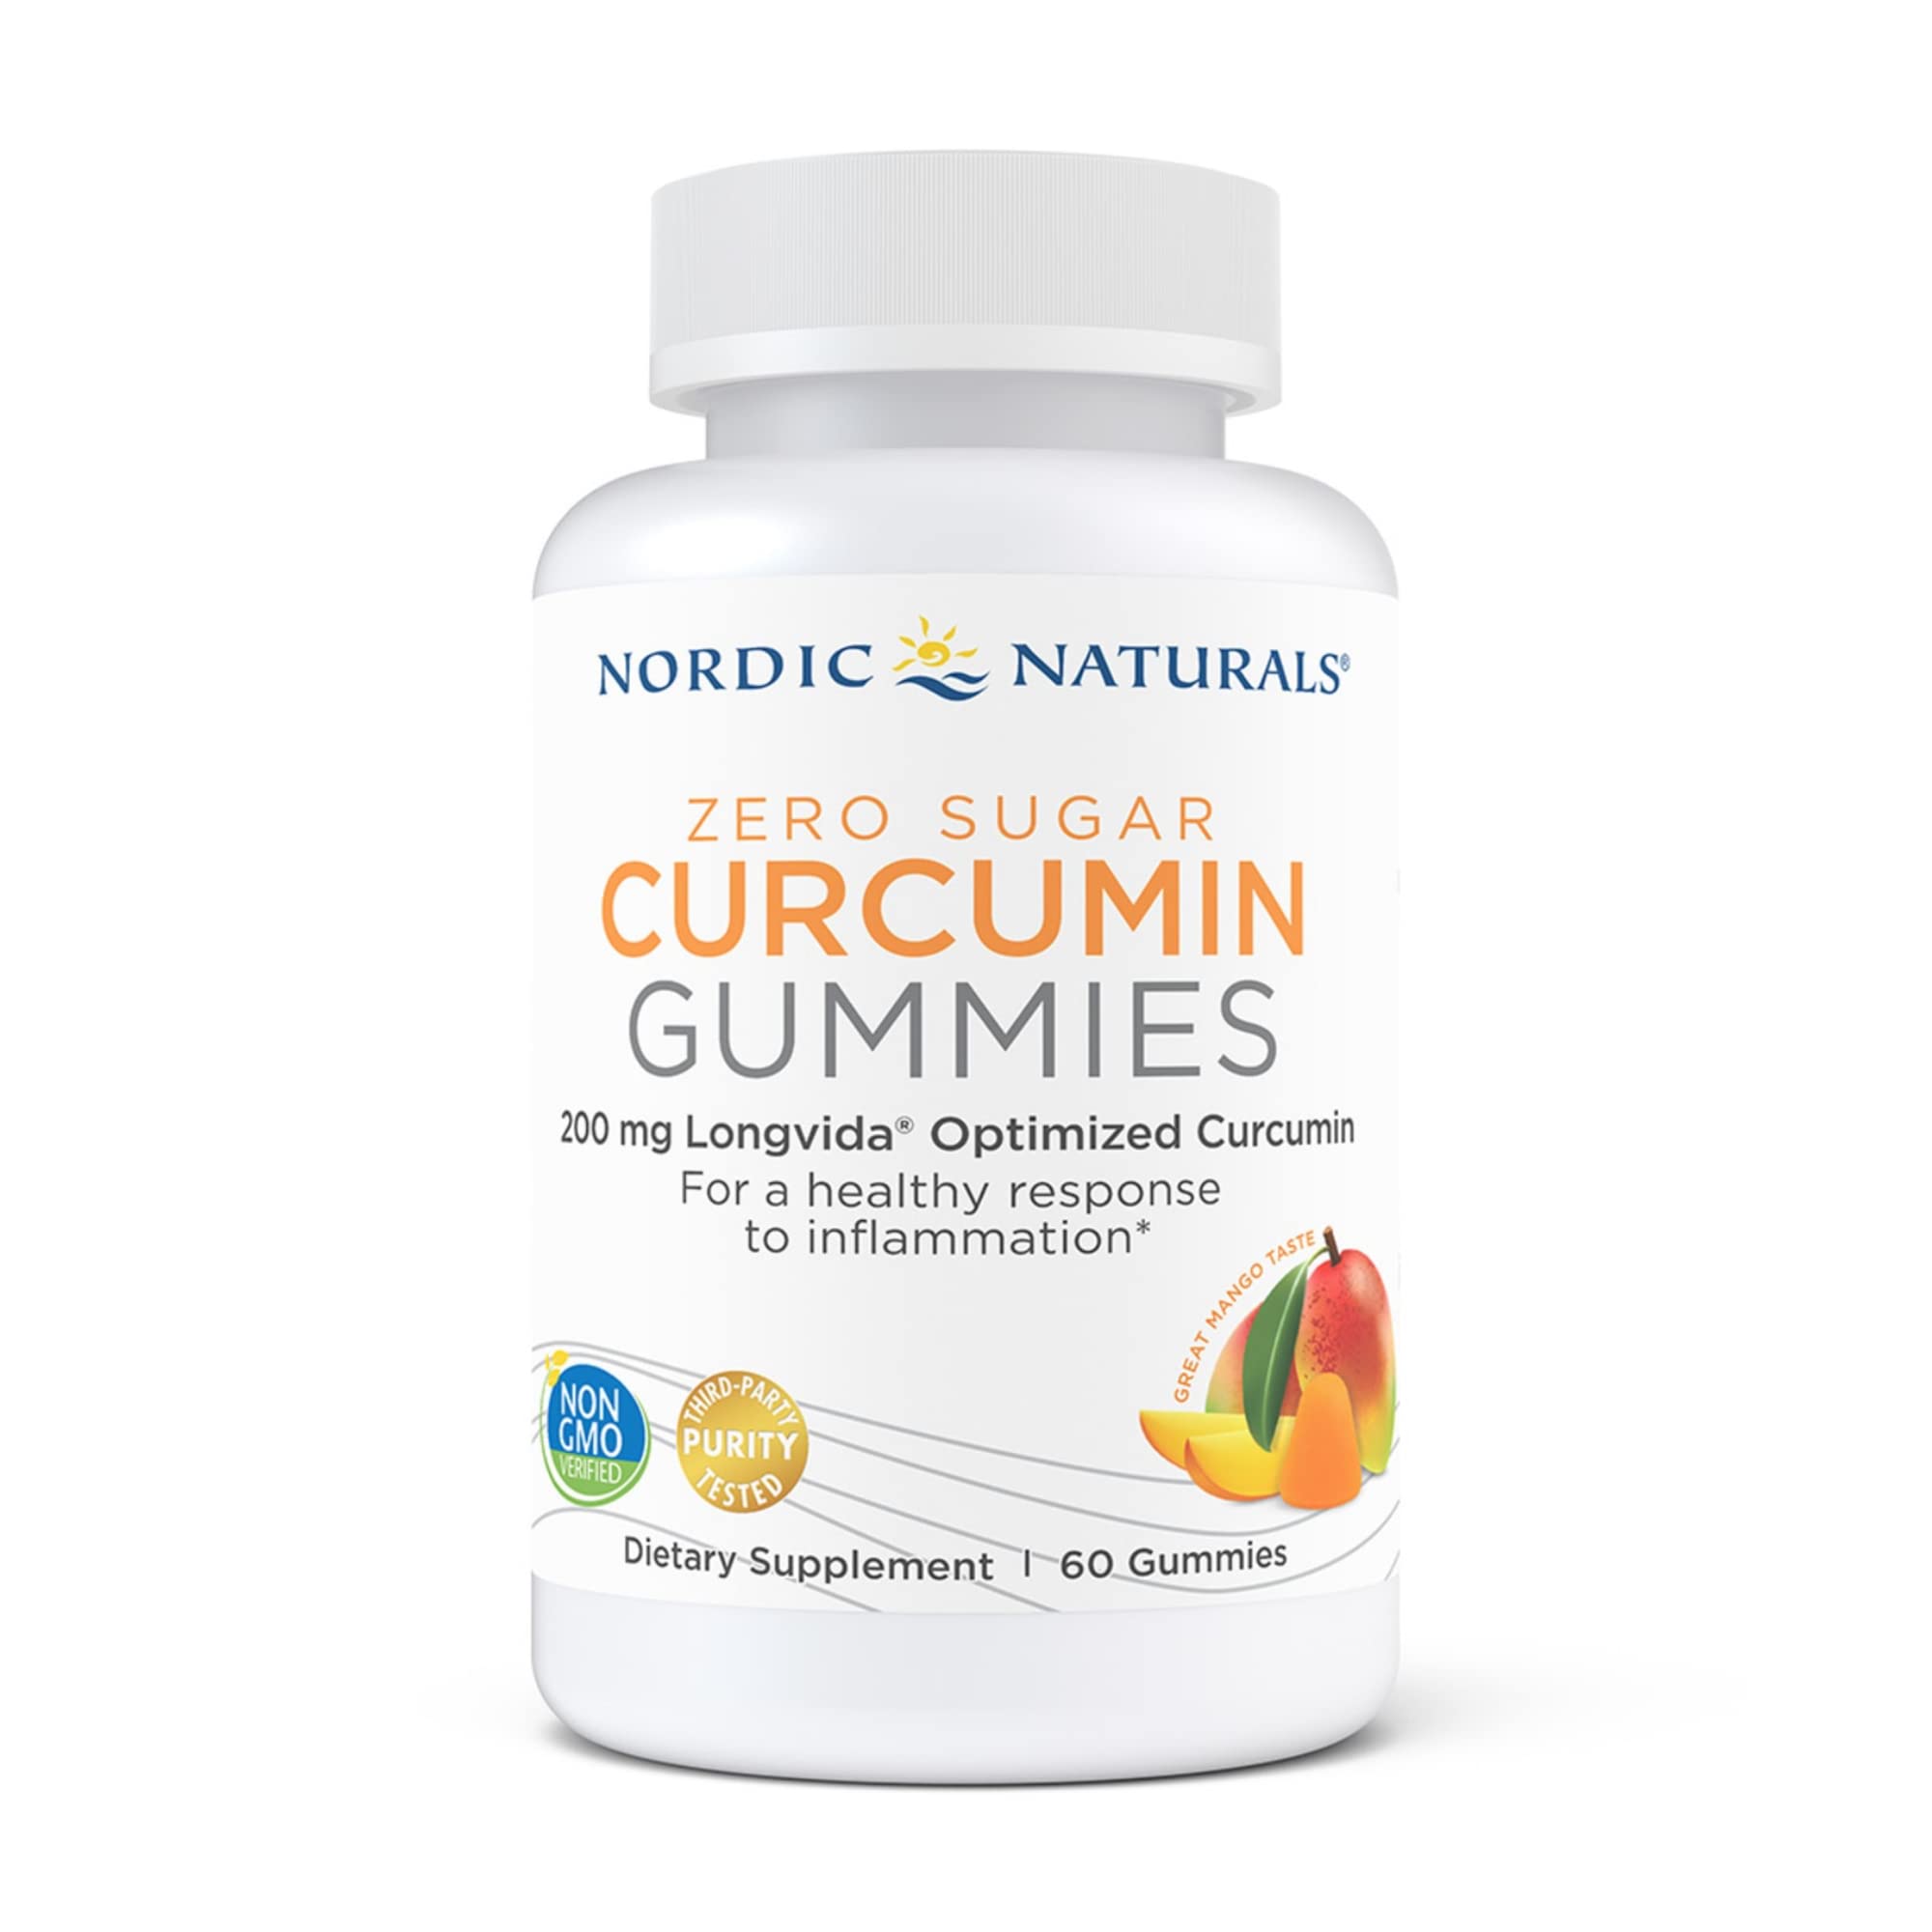 Nordic Naturals Zero Sugar Curcumin Gummies, Mango - 200 mg Optimized Curcumin Extract - 60 Gummies - Great Taste - Antioxidant Support, Healthy Metabolic Balance - Non-GMO, Vegan - 30 Servings